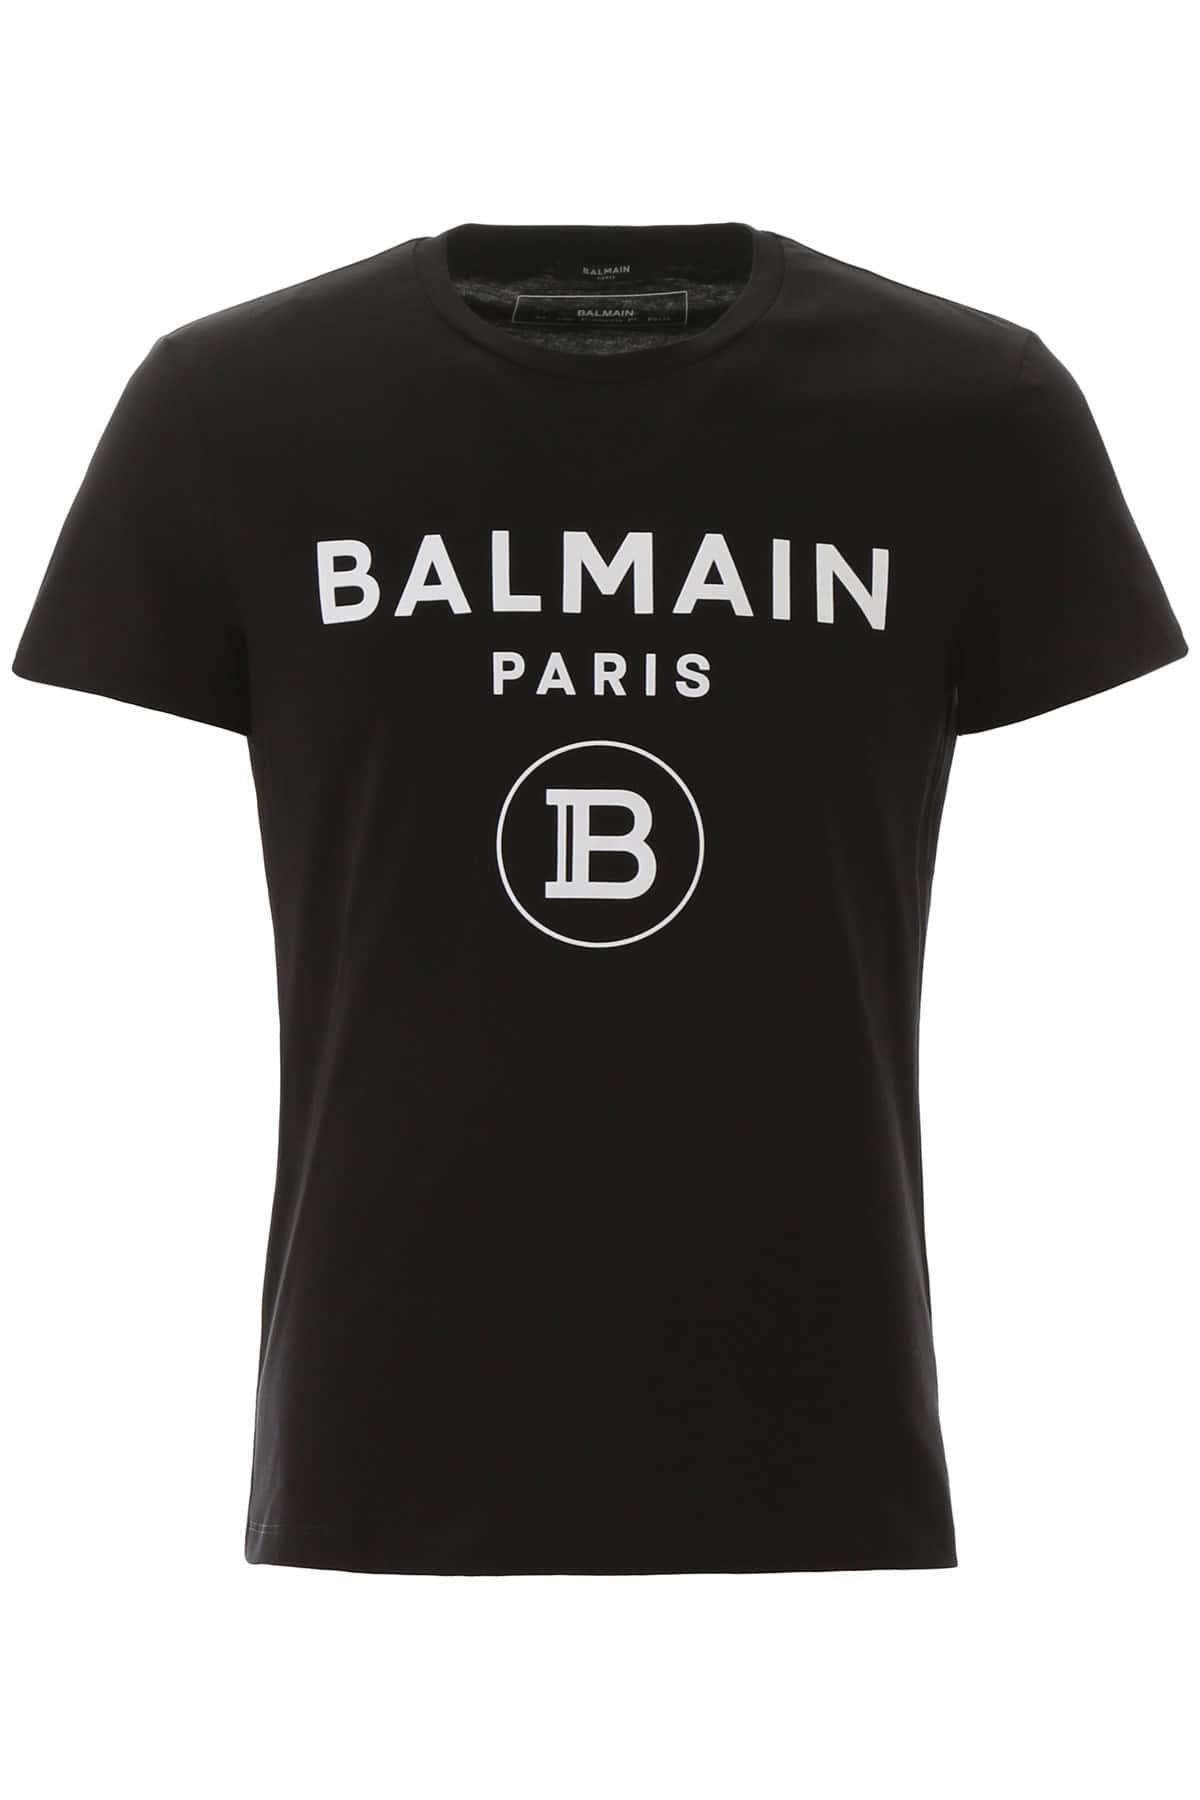 Balmain Stamp Logo Print T-shirt in Black for Men - Save 55% - Lyst